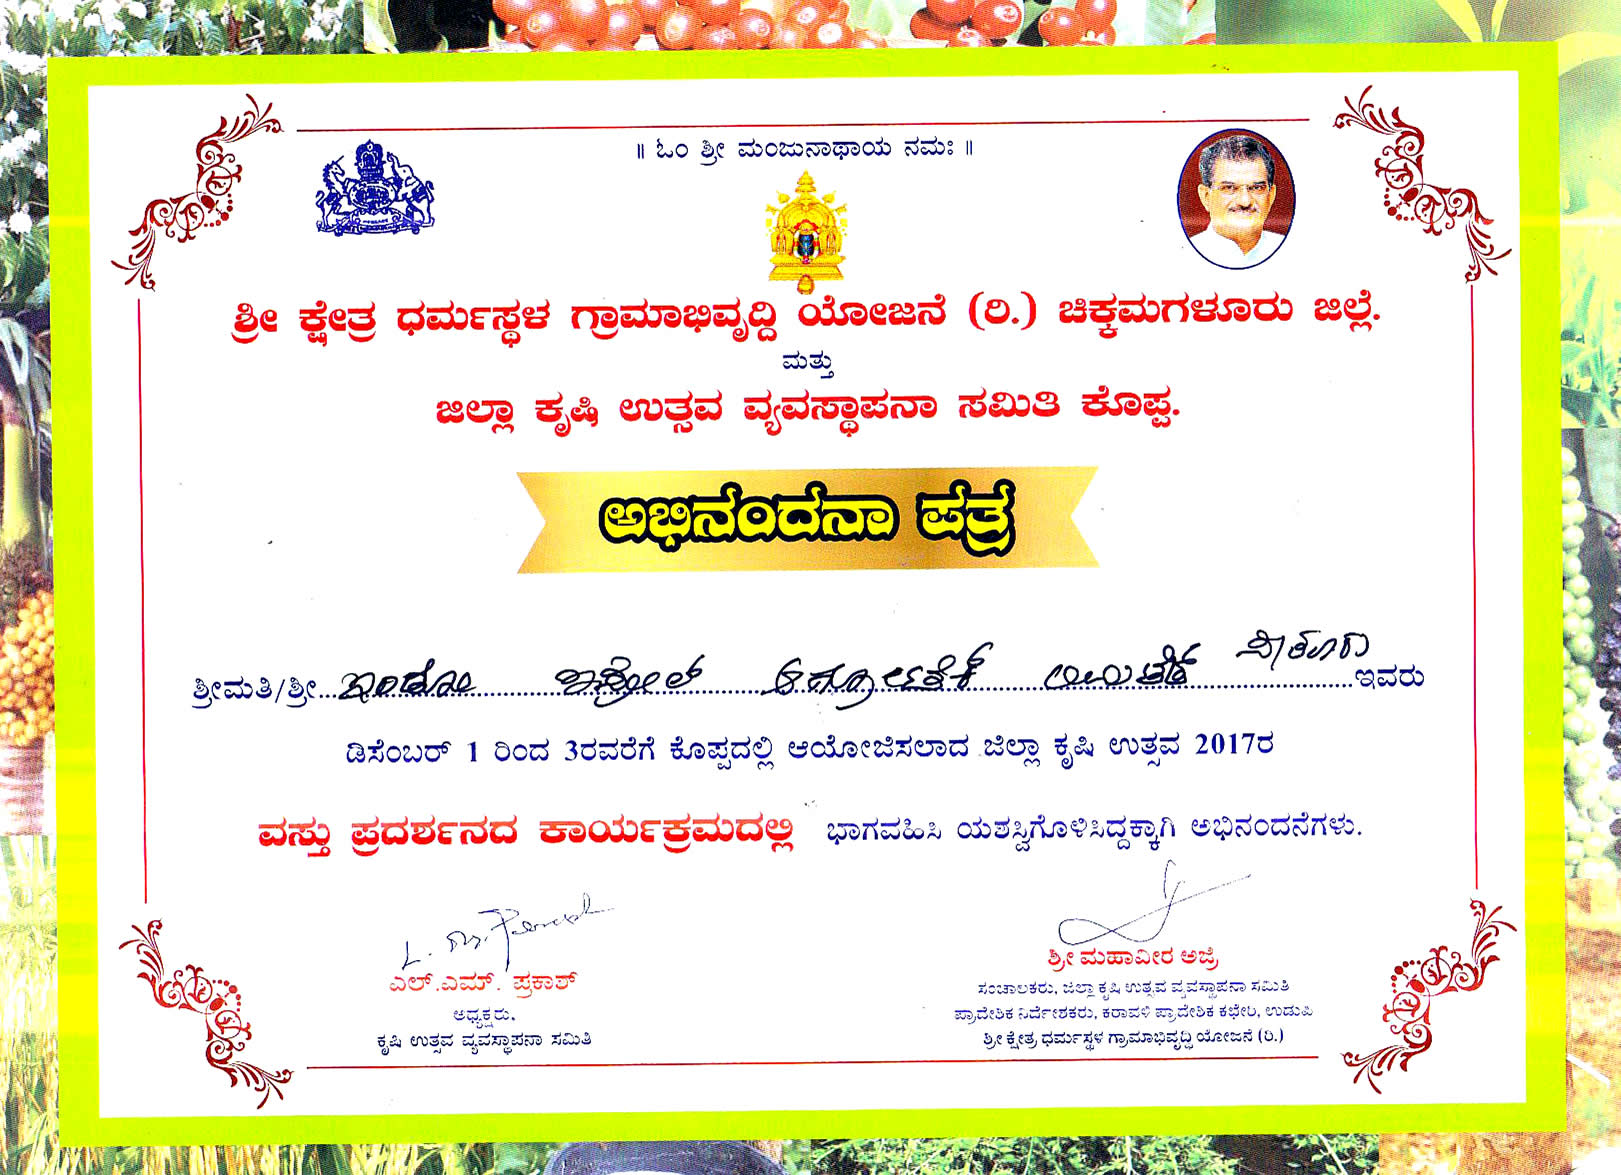 Koppa Chikmanglur Karnataka State - Exhibition